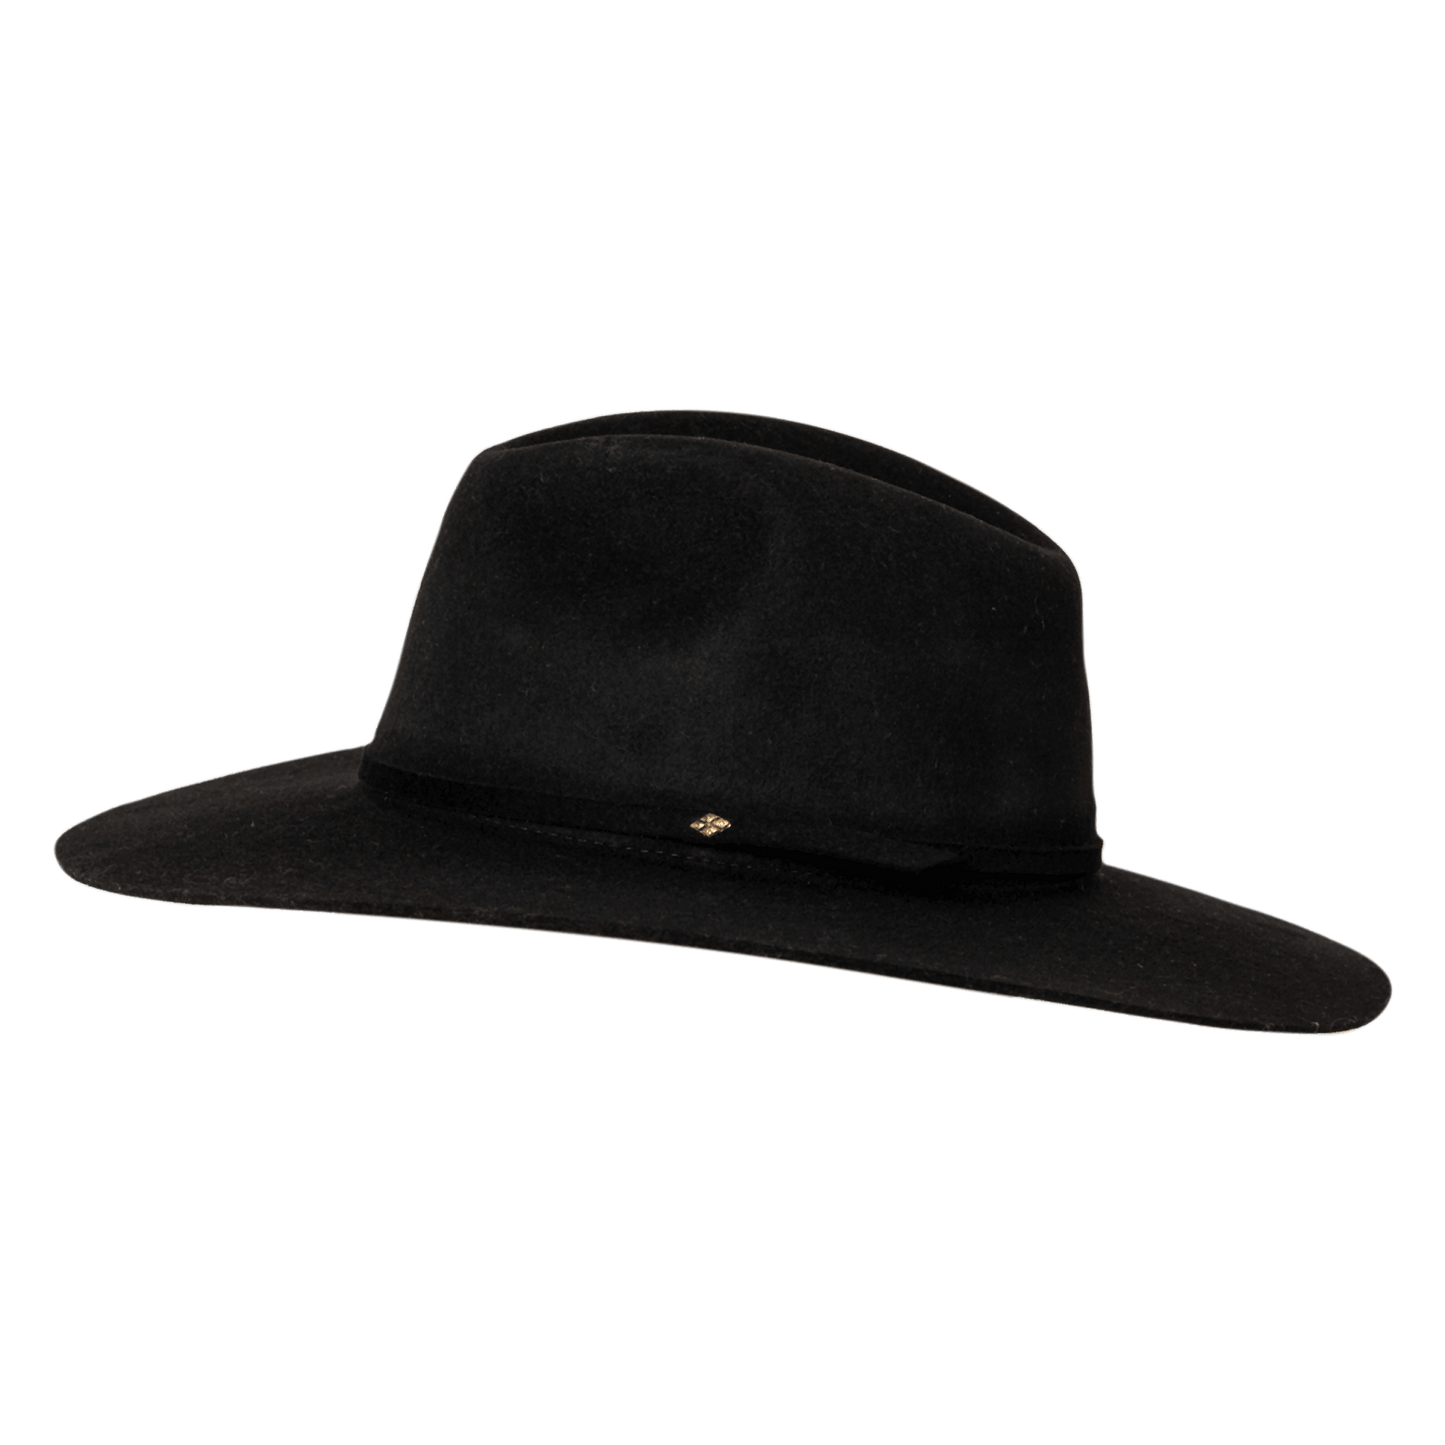    Sombrero-fedora-fieltro-negro-vista-lateral